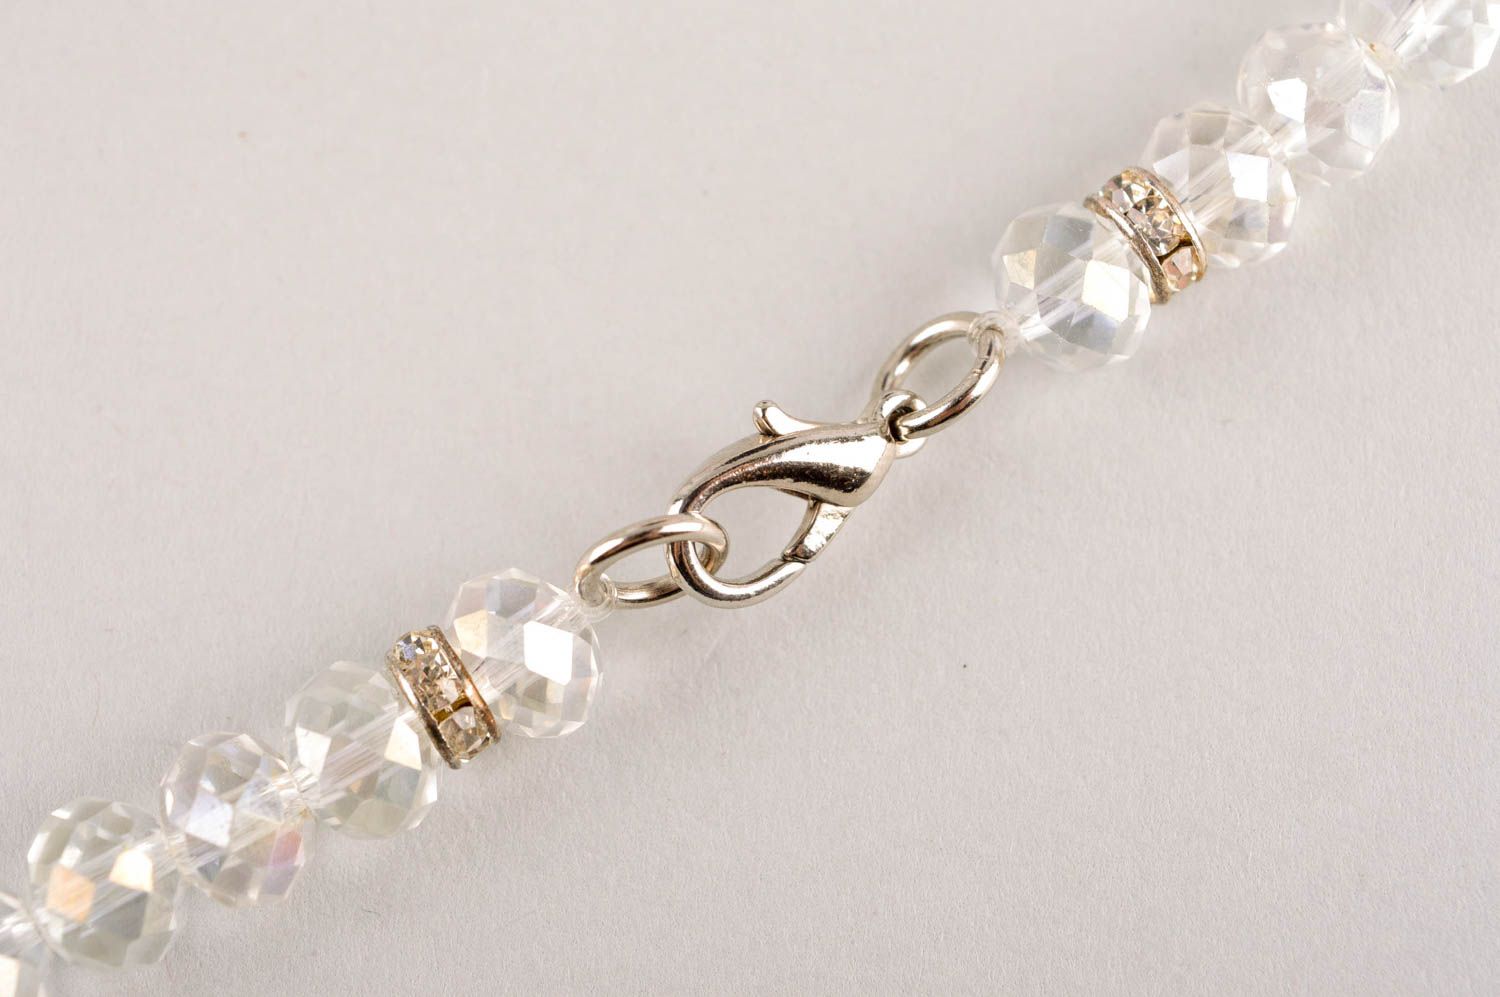 Handmade crystal beads designer collar unique bijouterie accessories for her photo 4